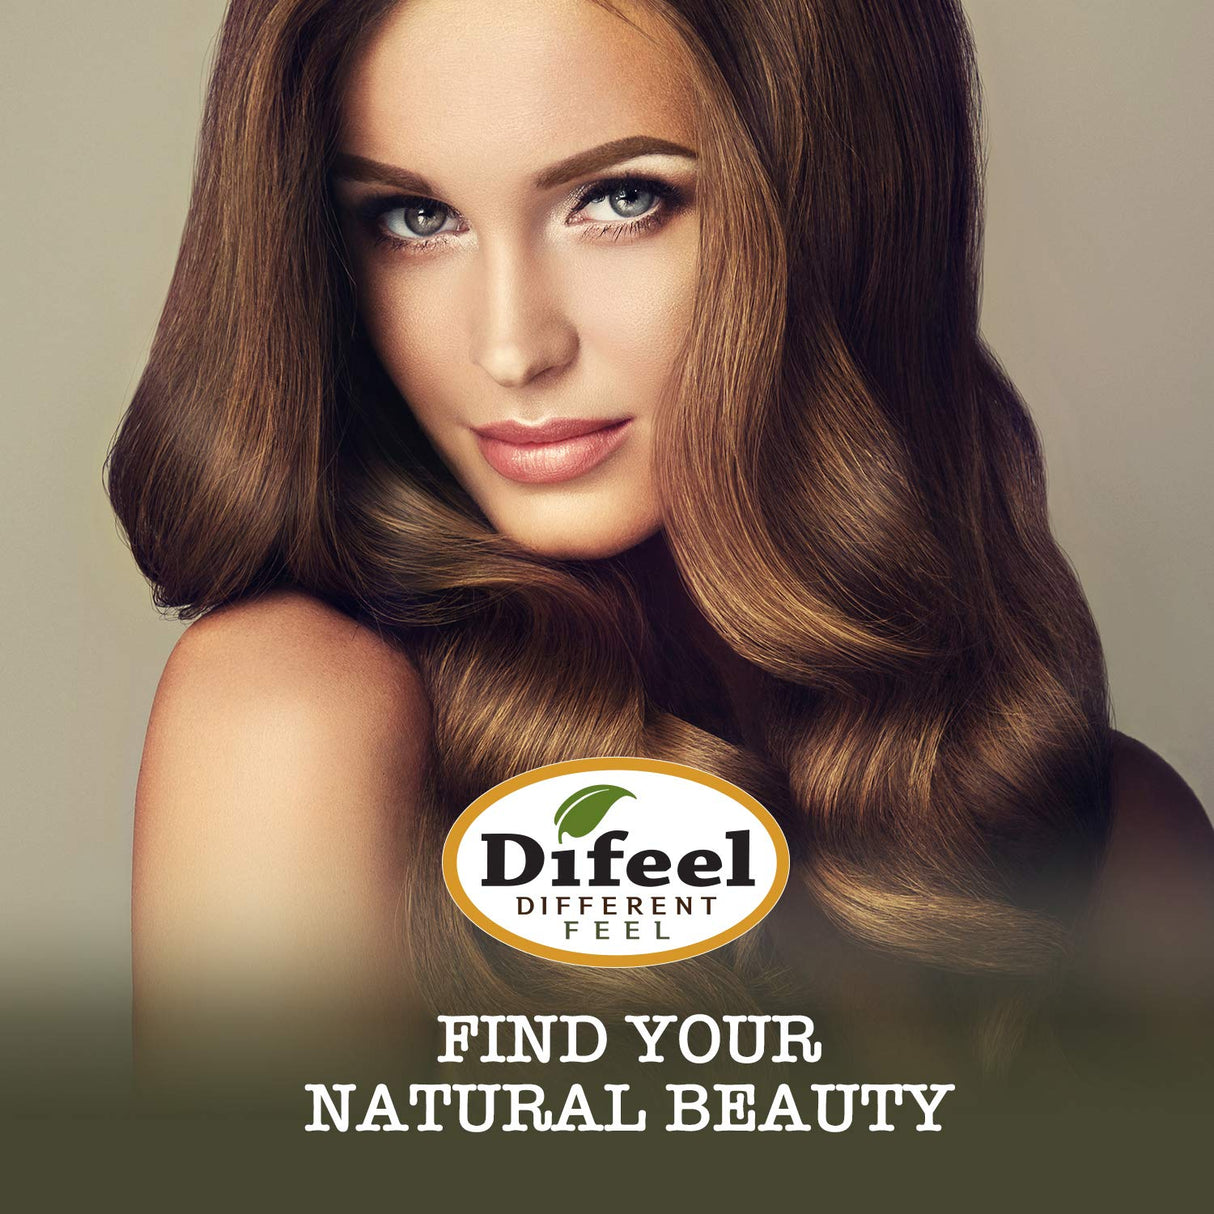 Difeel Hemp 99% Natural Hemp Hair Oil - Strengthen 2.5 ounce Find Your New Look Today!